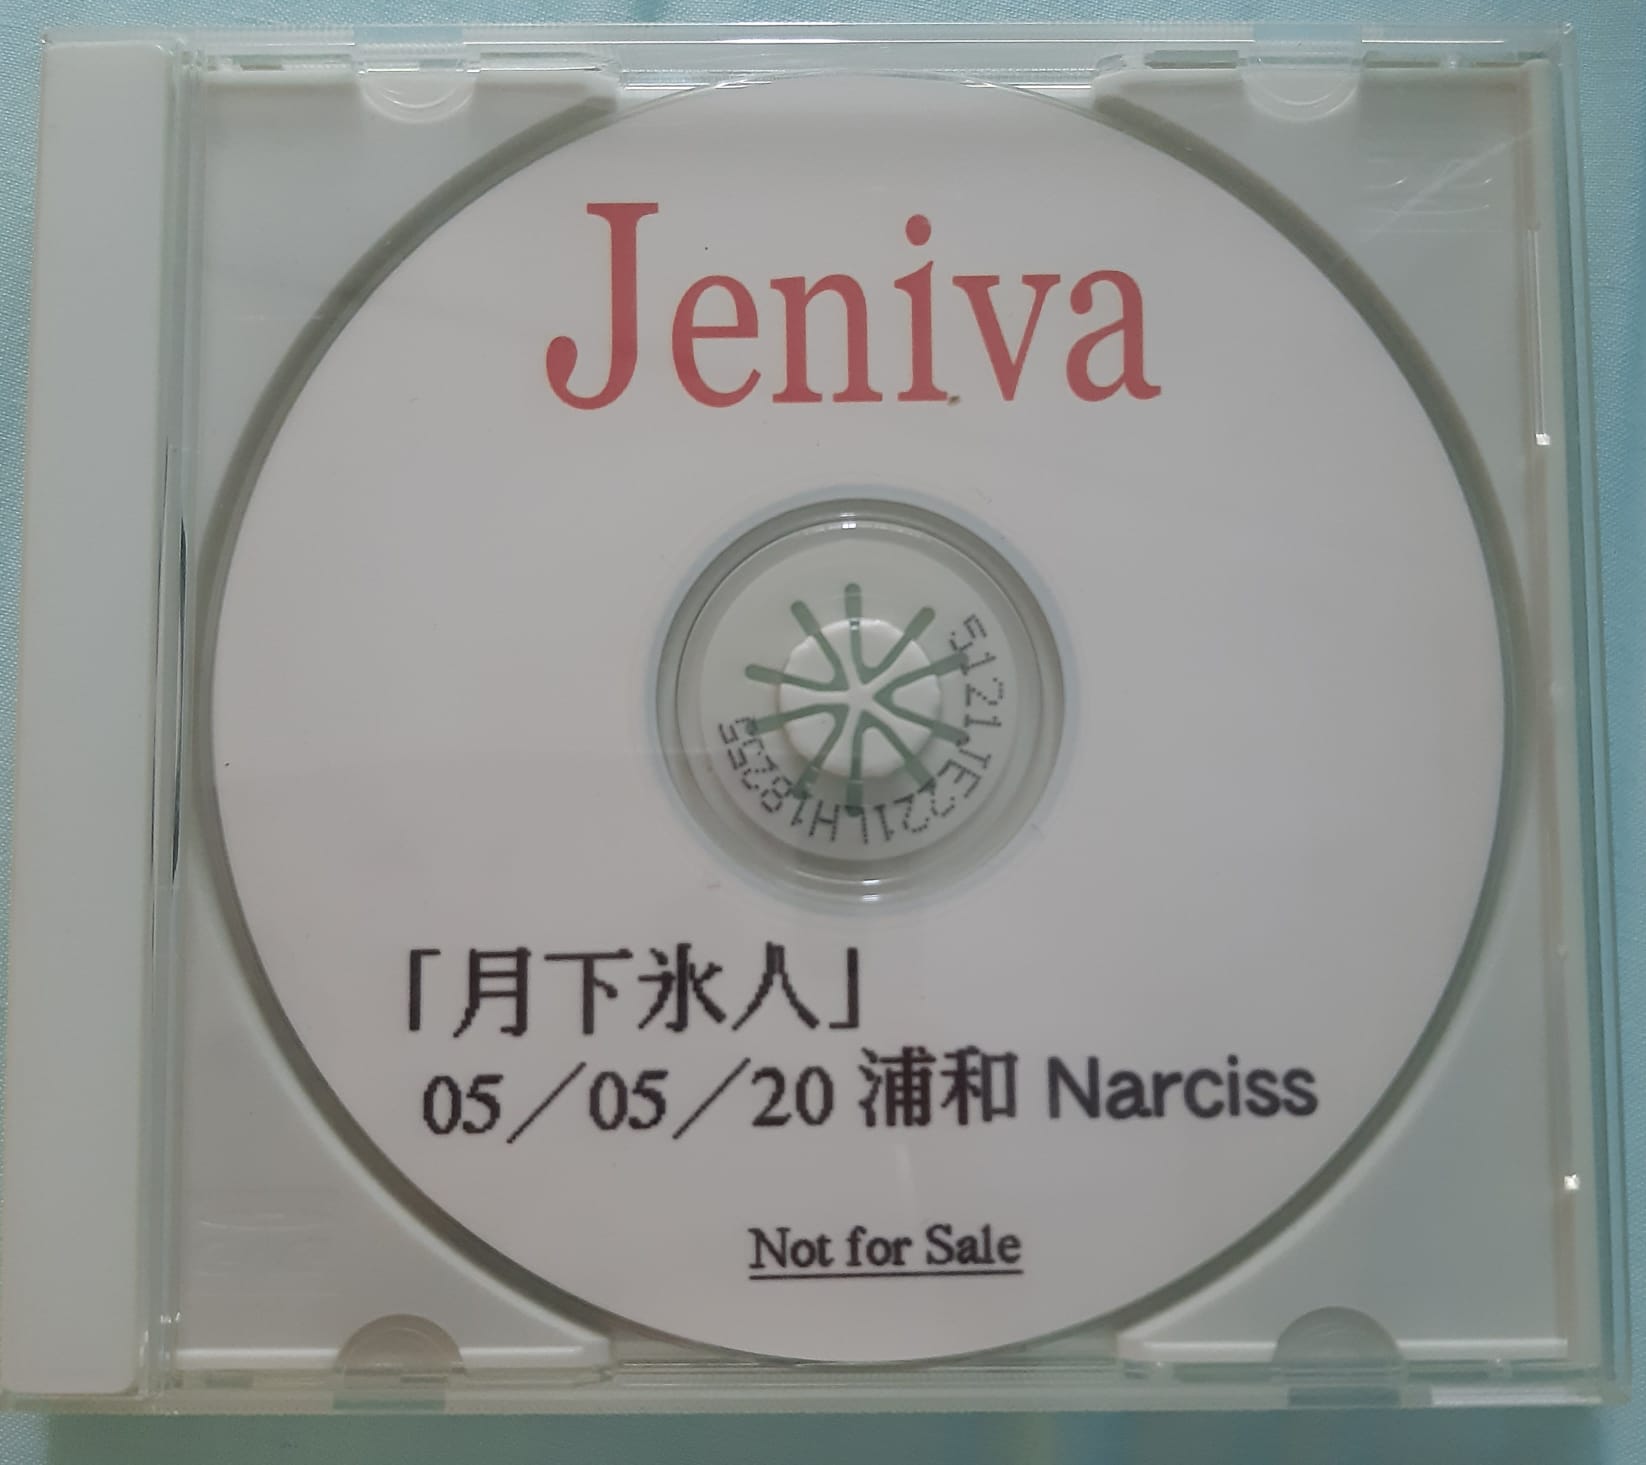 Jeniva audio and scans